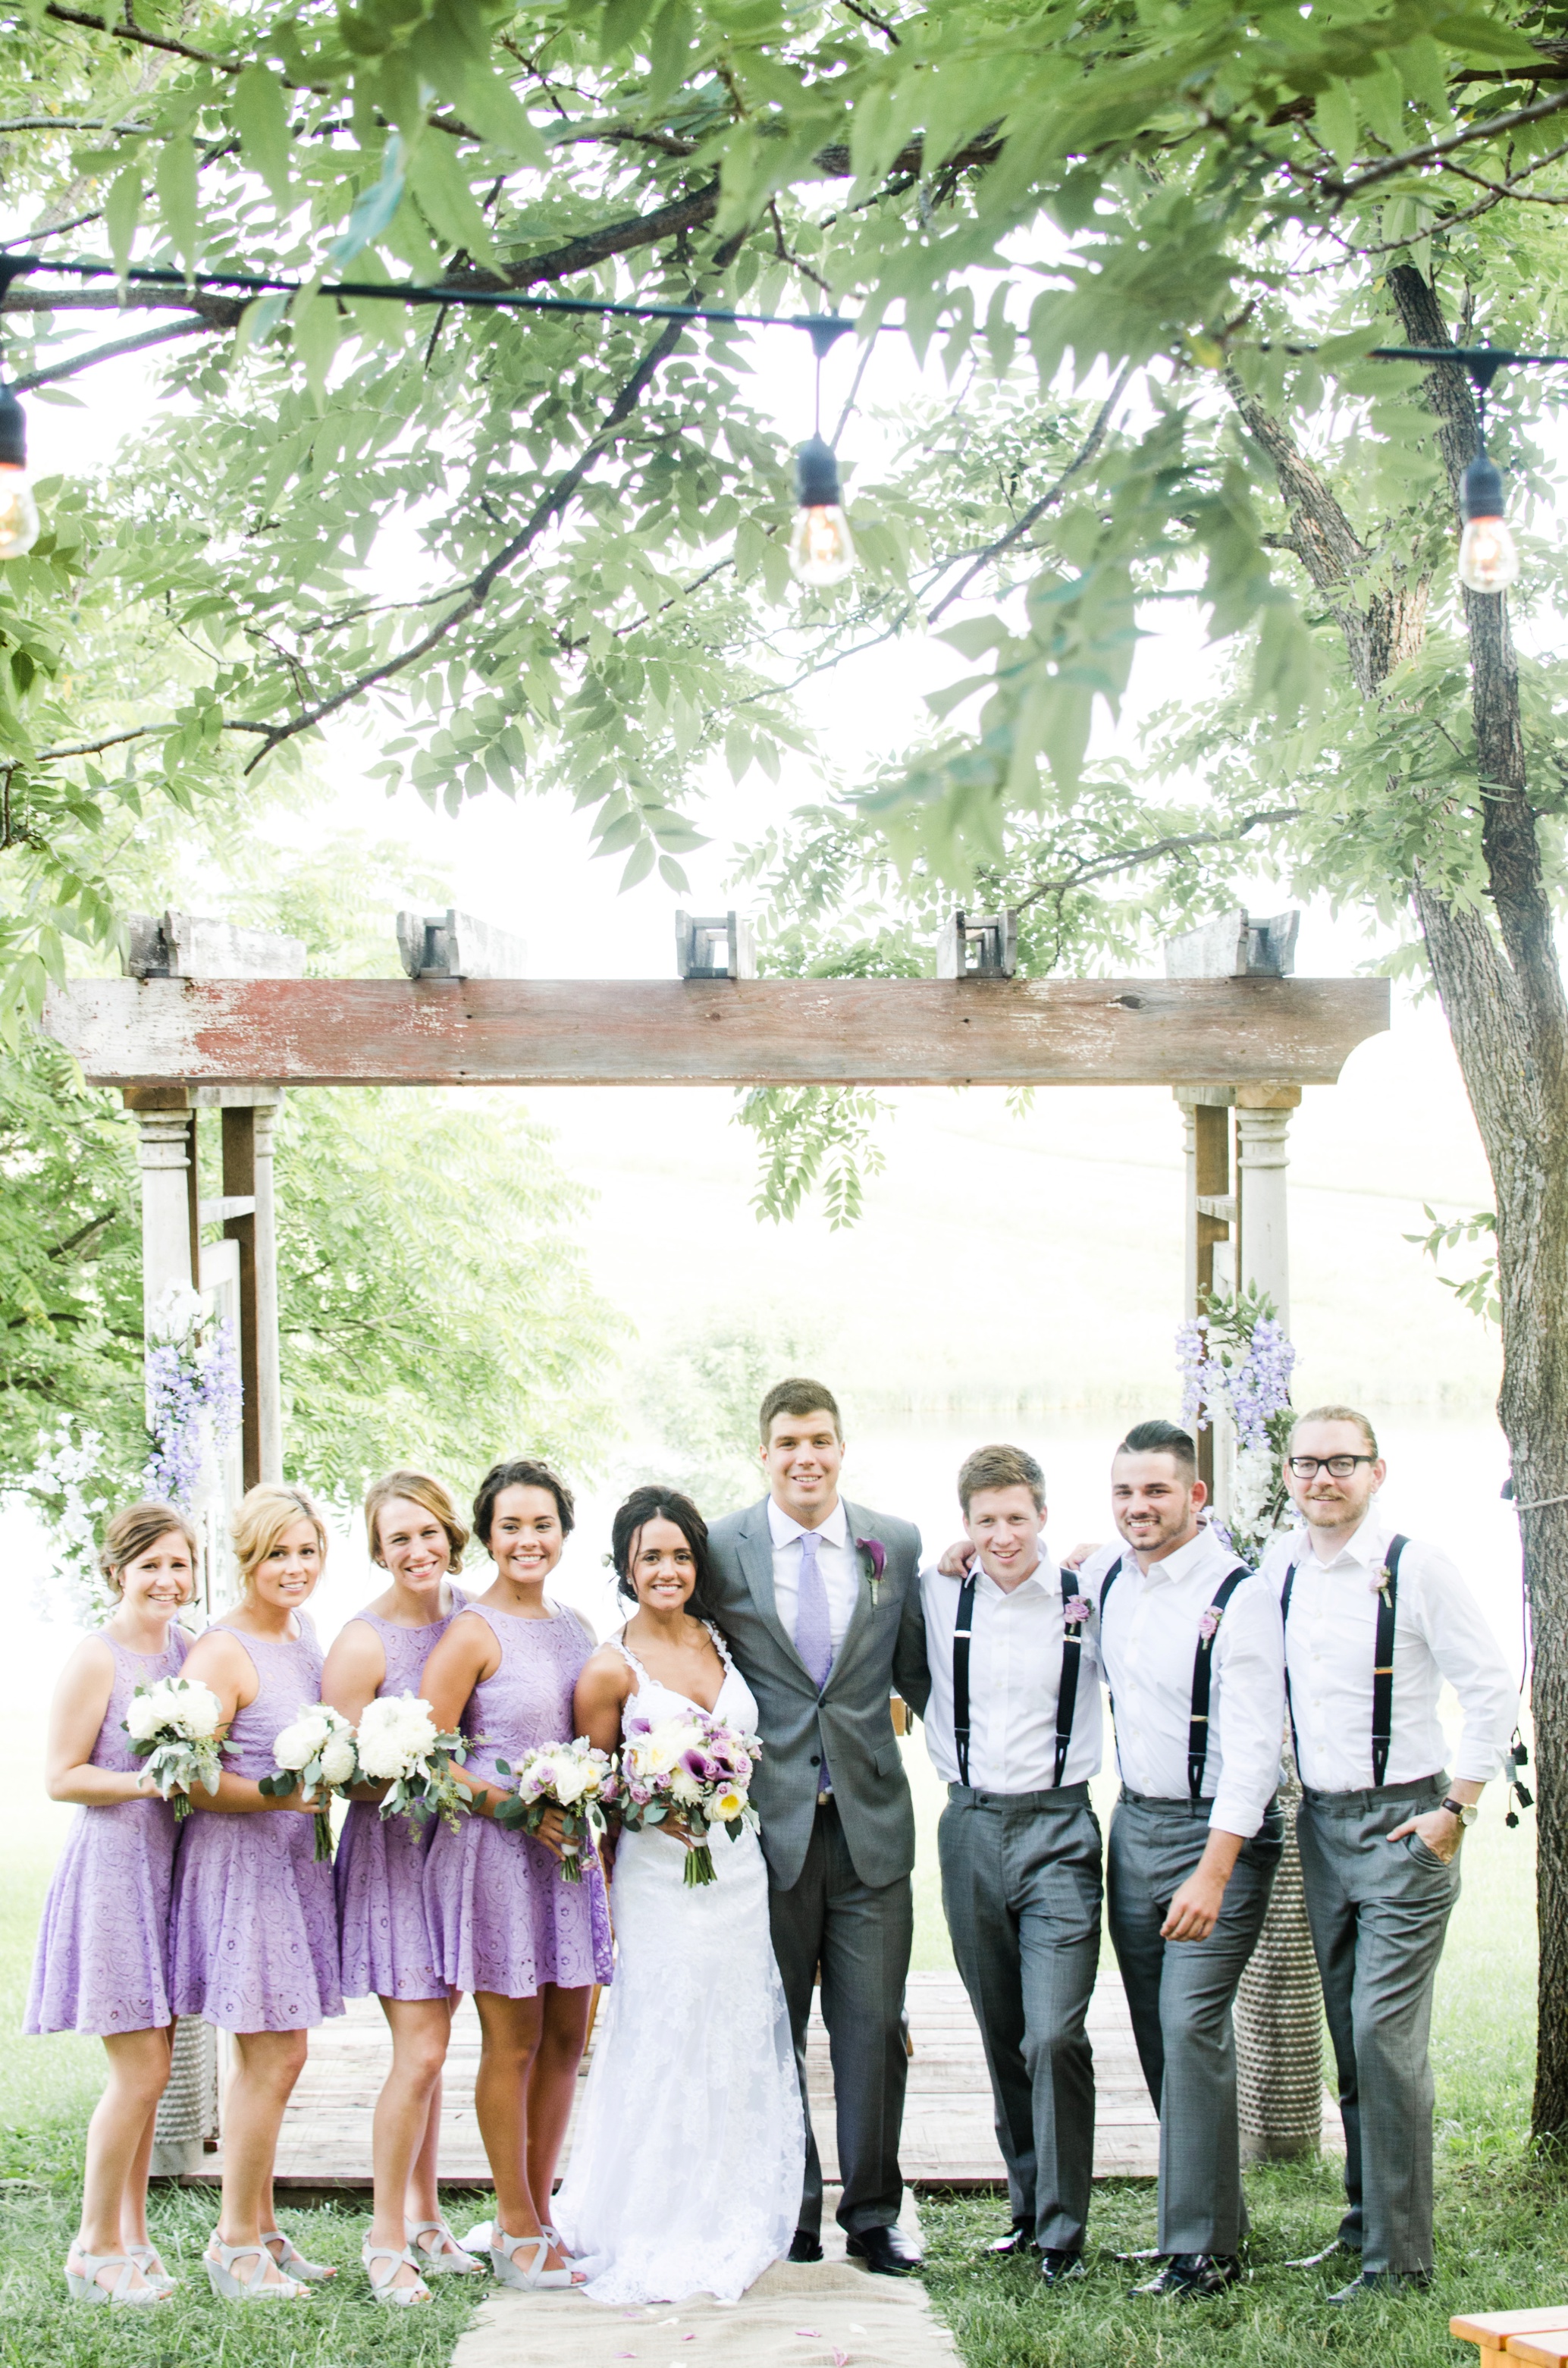 Barnes' Place Rustic Outdoor Wedding | Ali Leigh Photo Minneapolis Wedding Photographer_0139.jpg